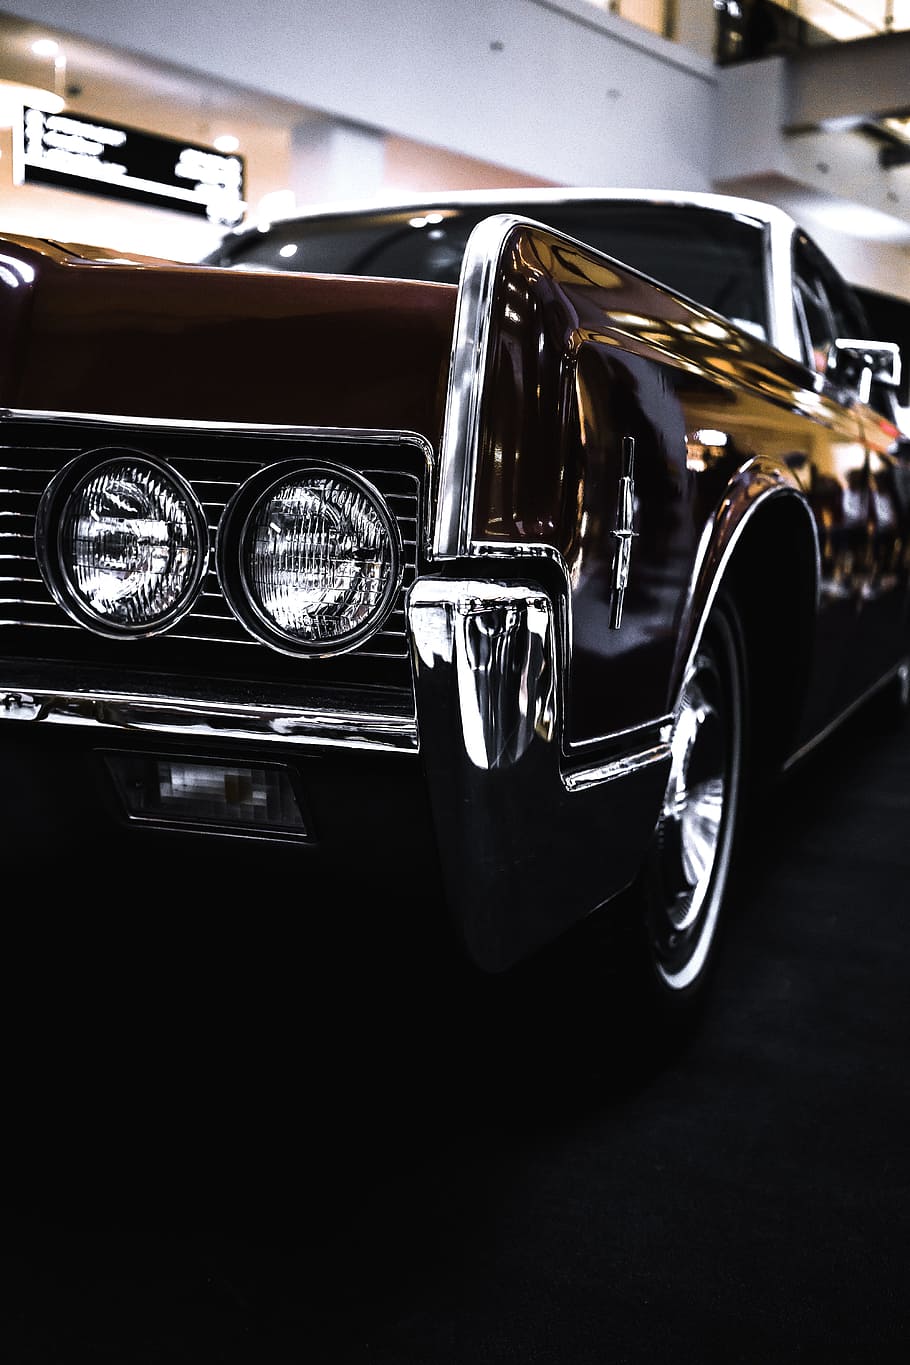 black car macro shot, focus photo of classic black Lincoln vehicle